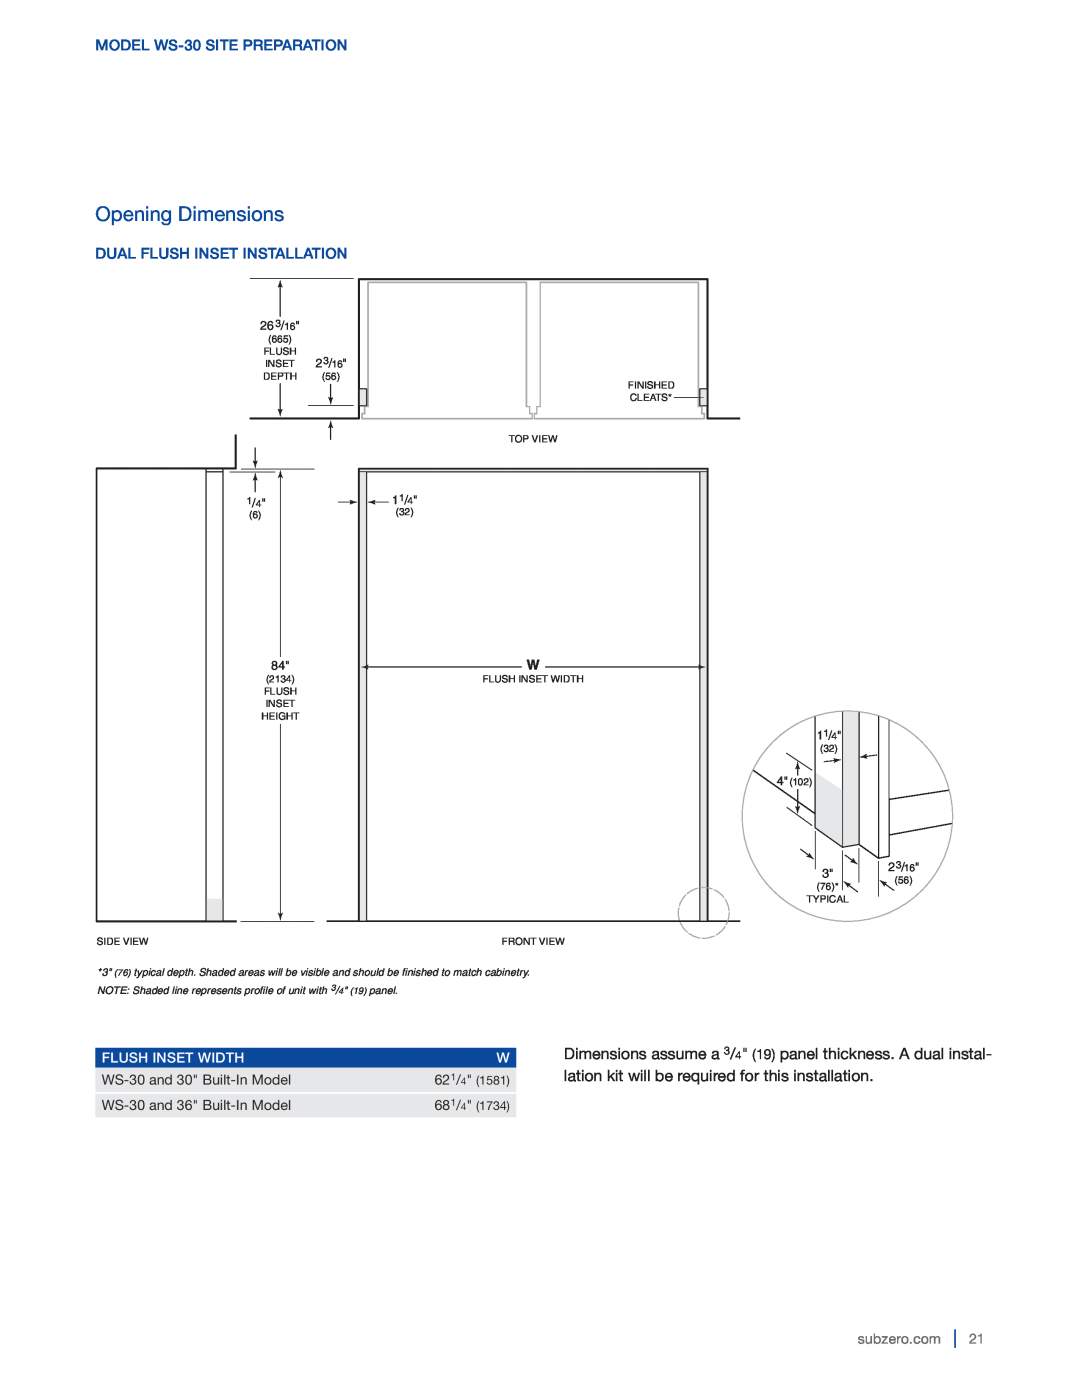 Sub-Zero manual Opening Dimensions, MODEL WS-30SITE PREPARATION, Dual Flush Inset Installation, Flush Inset Width, 621/4 